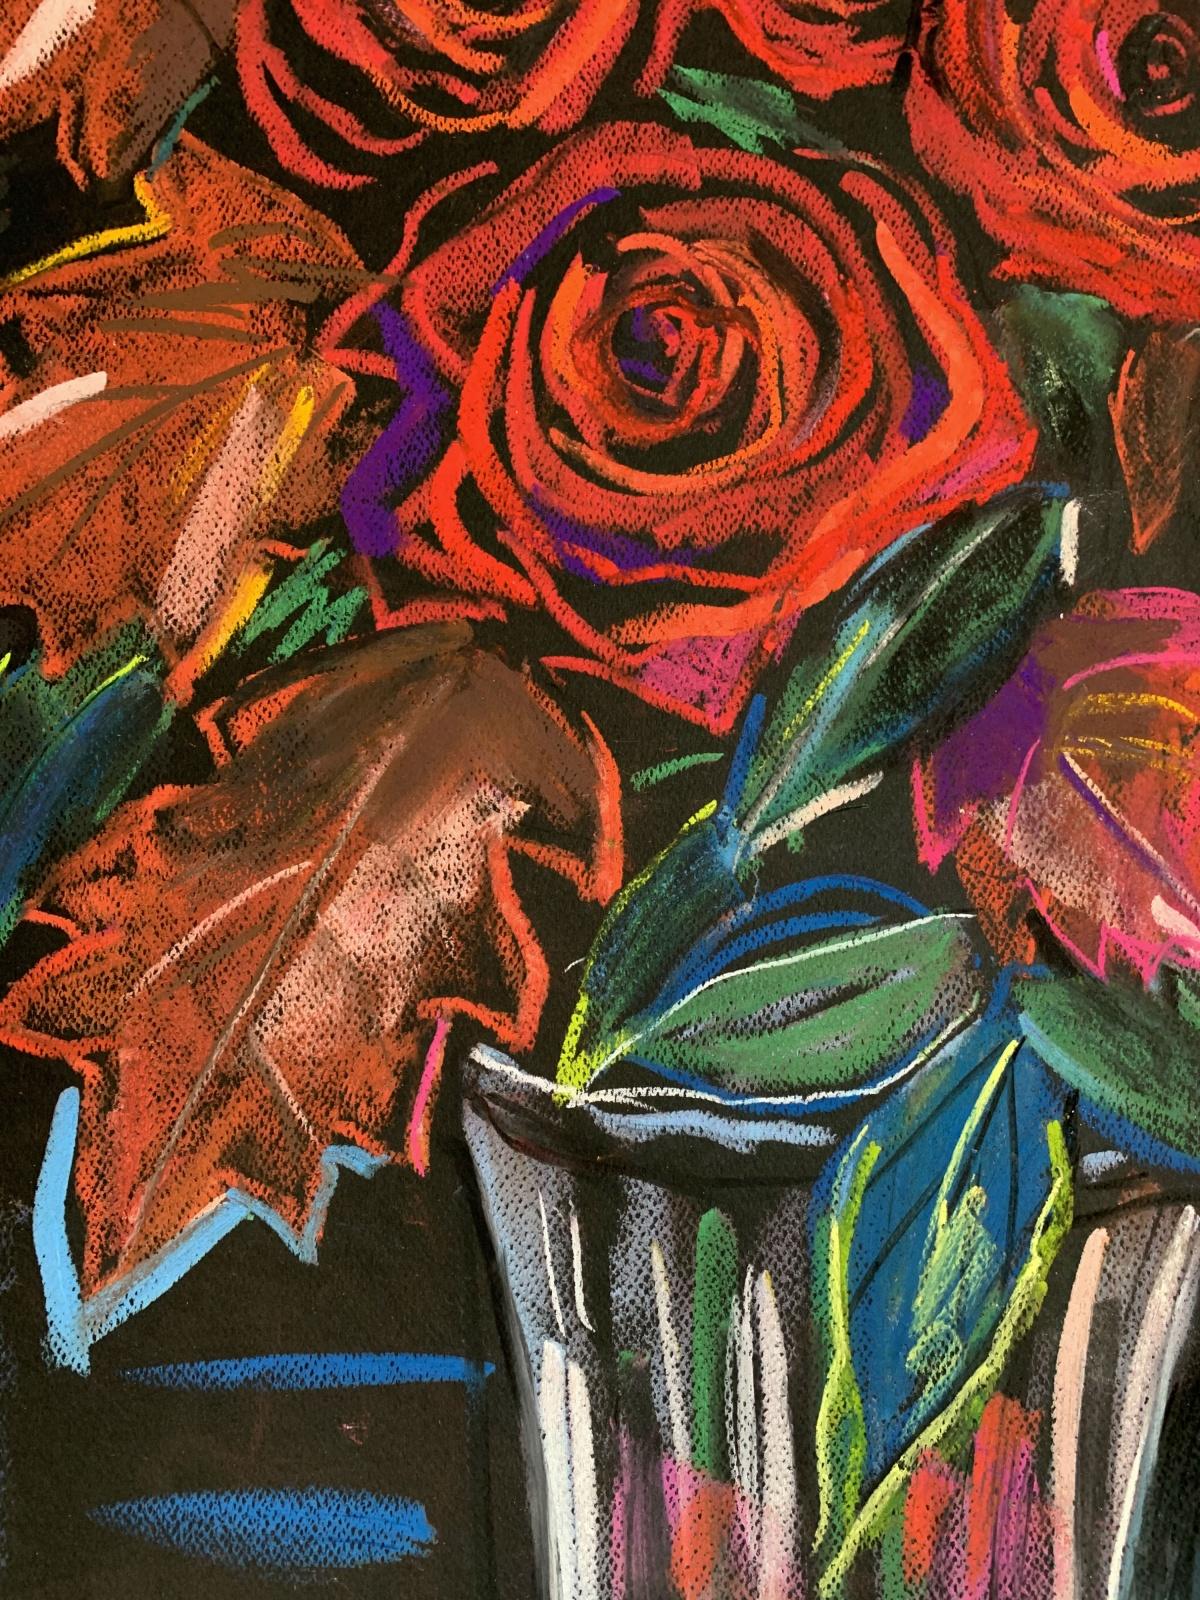 Flowers Antivirus - Drawing figuratif Pastel, Colorgul, Vibrant, Nature morte - Contemporain Art par Hanna Bakuła